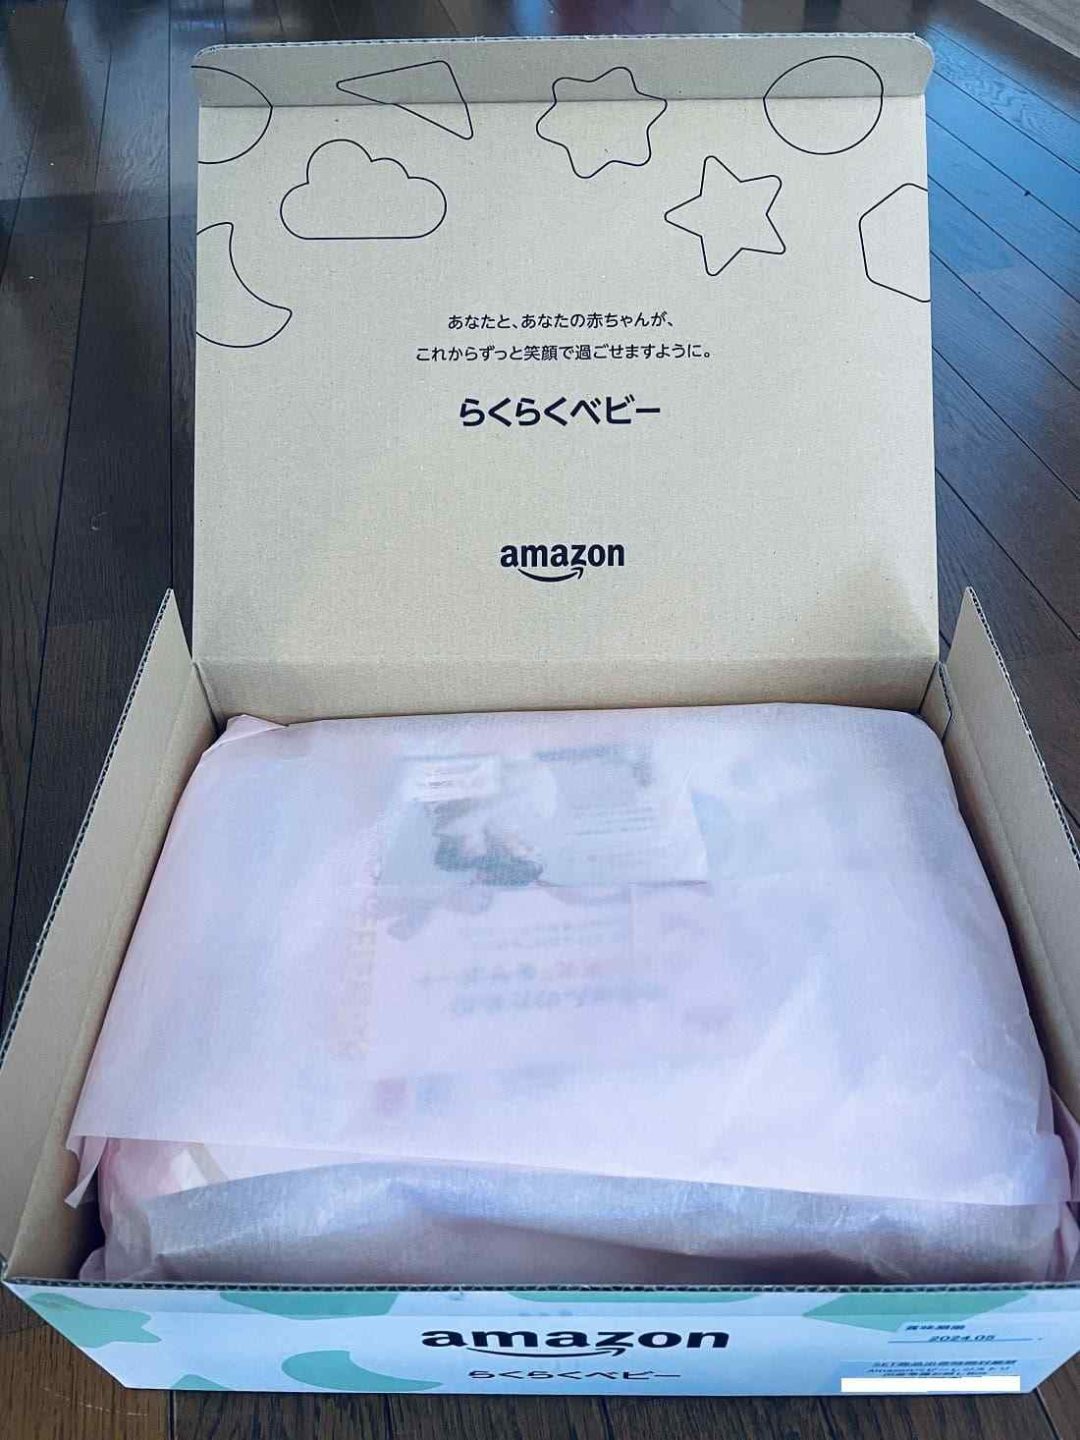 Amazon出産準備お試しボックスの実際に届いた中身